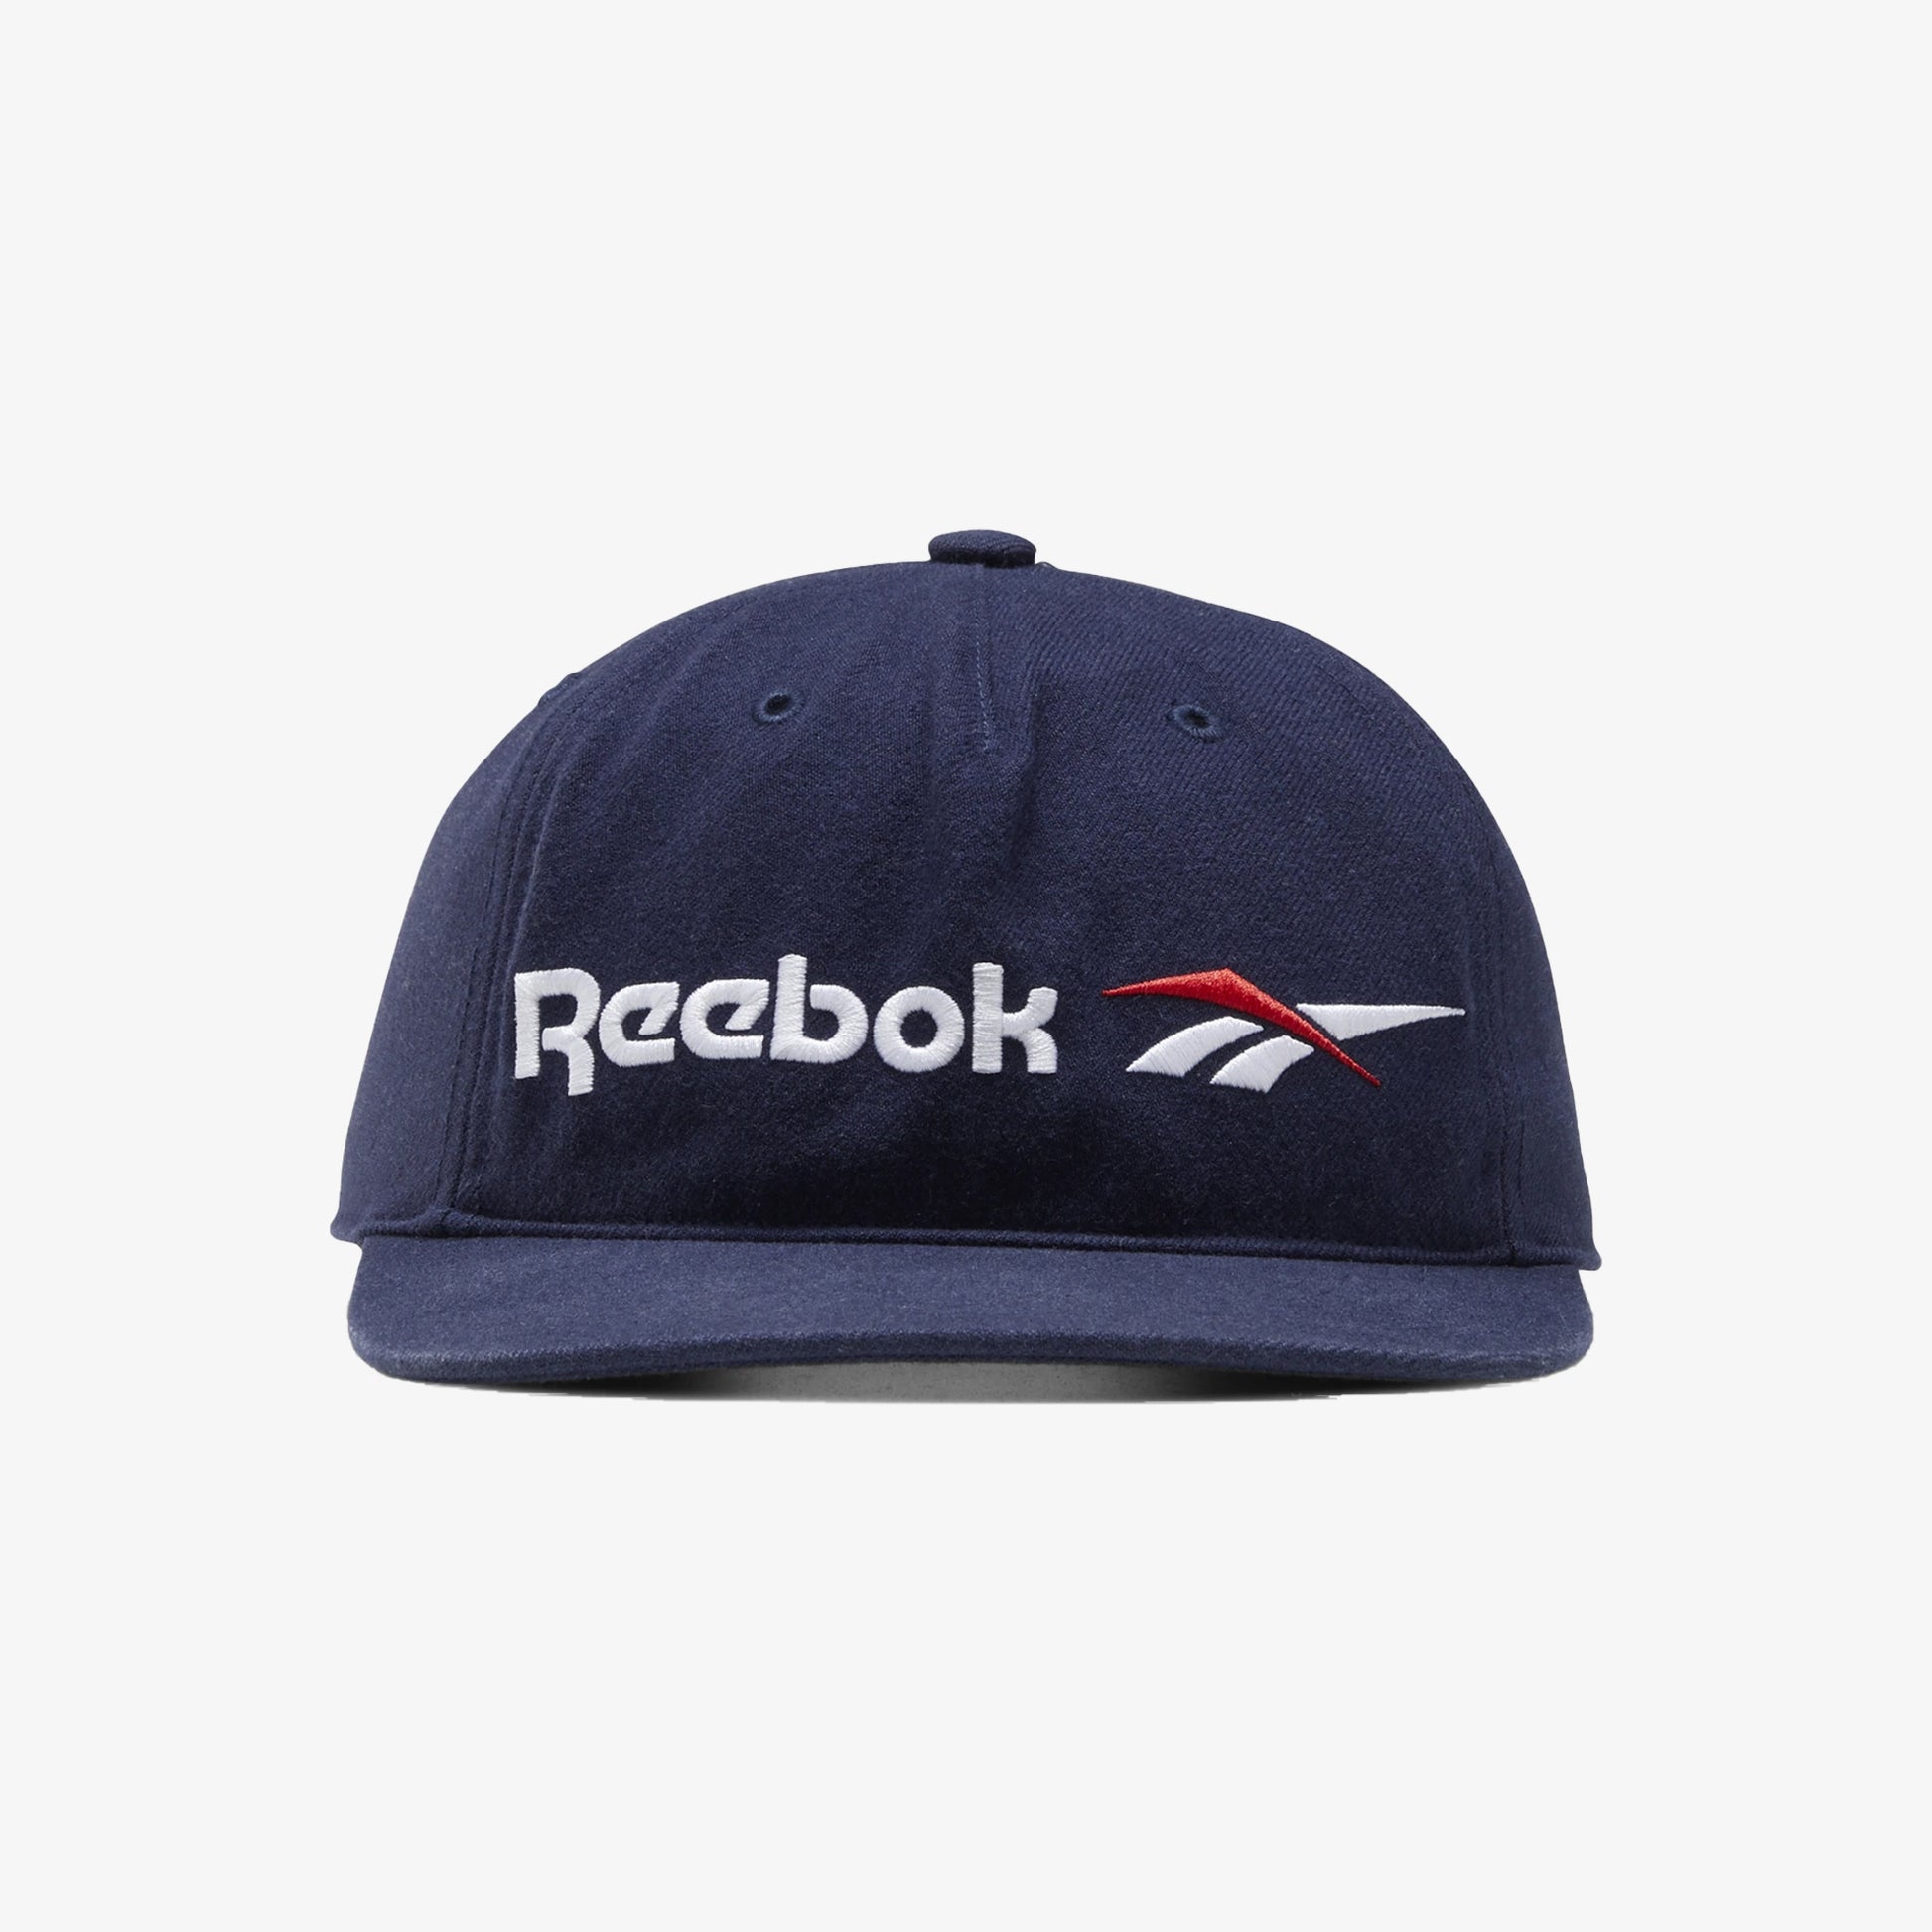 reebok logo hat